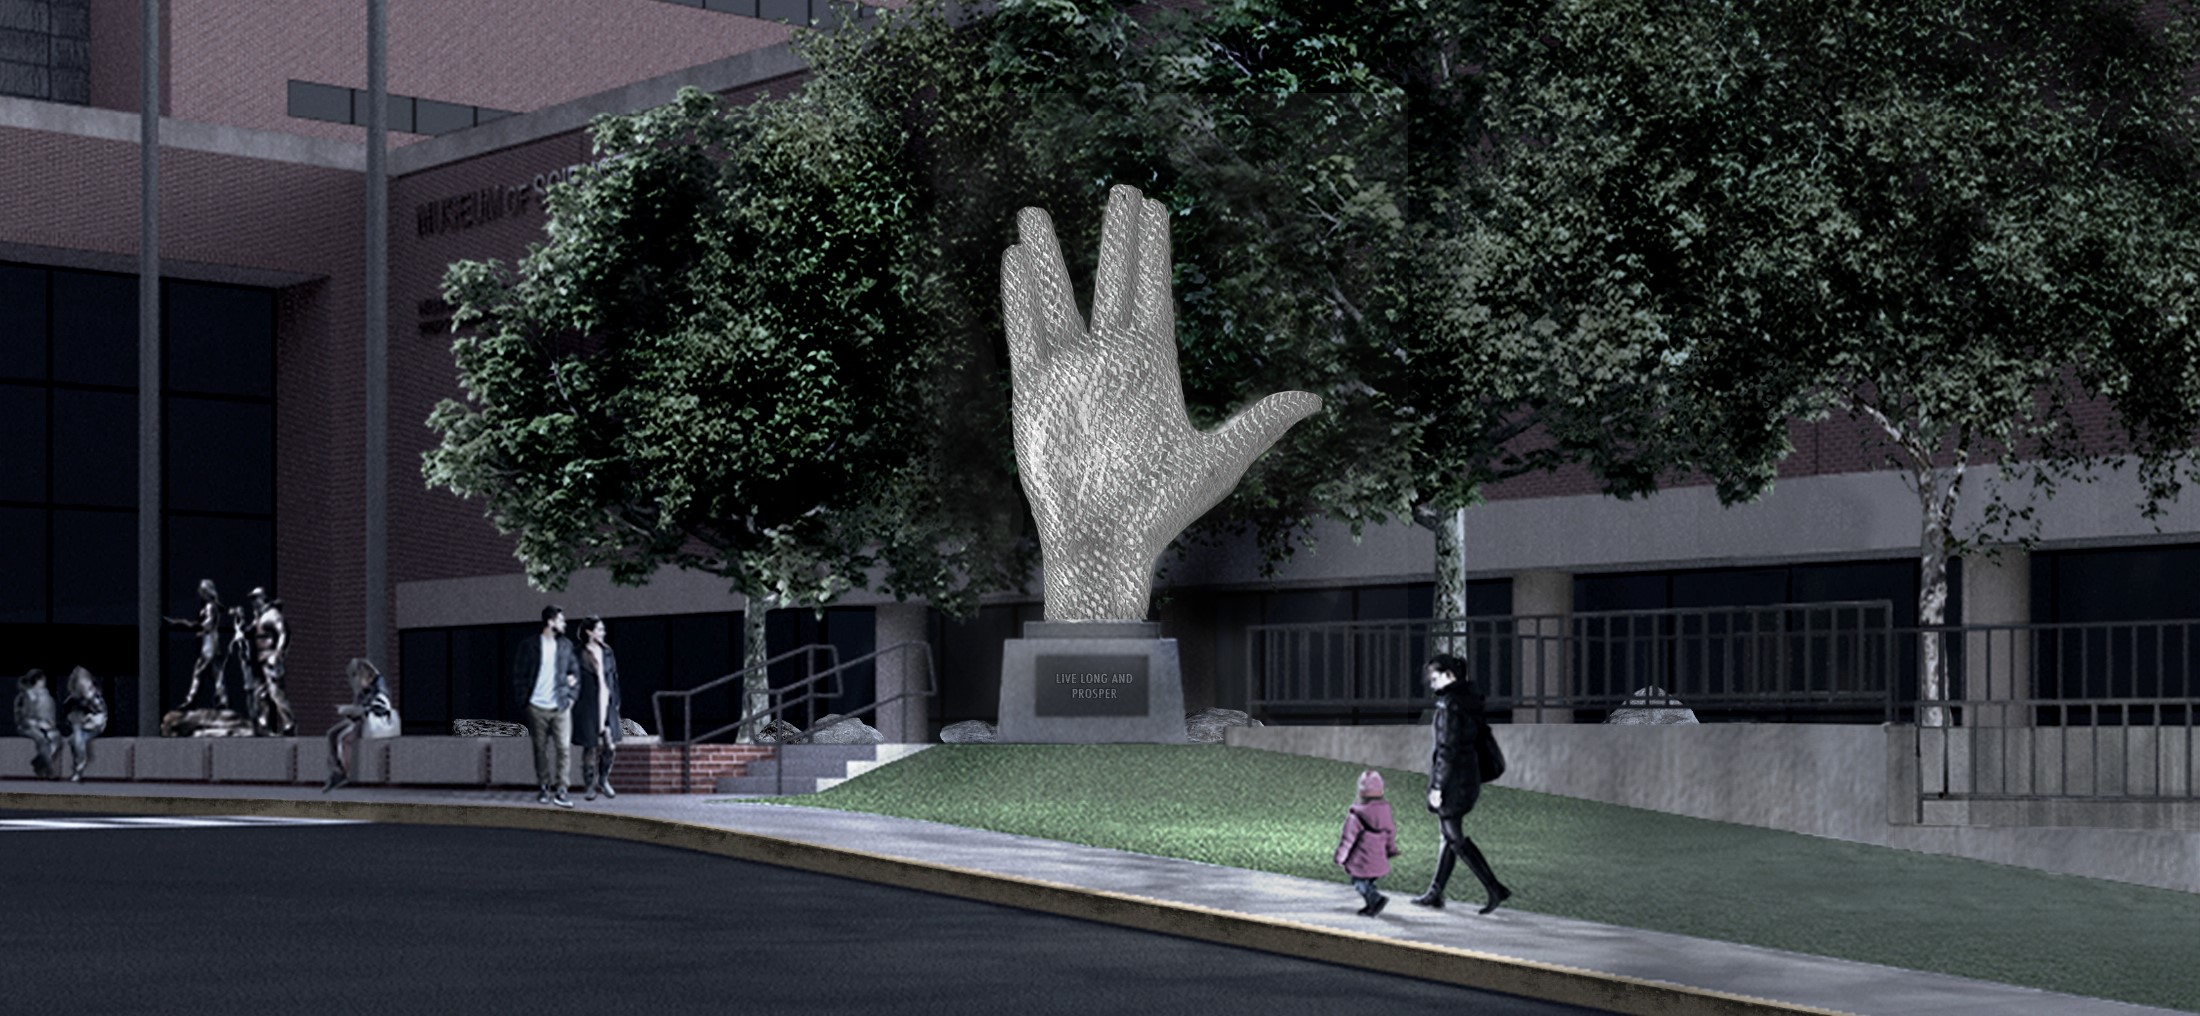 Spock-tacular! Tech Pioneer Boosts Plan for Leonard Nimoy Memorial